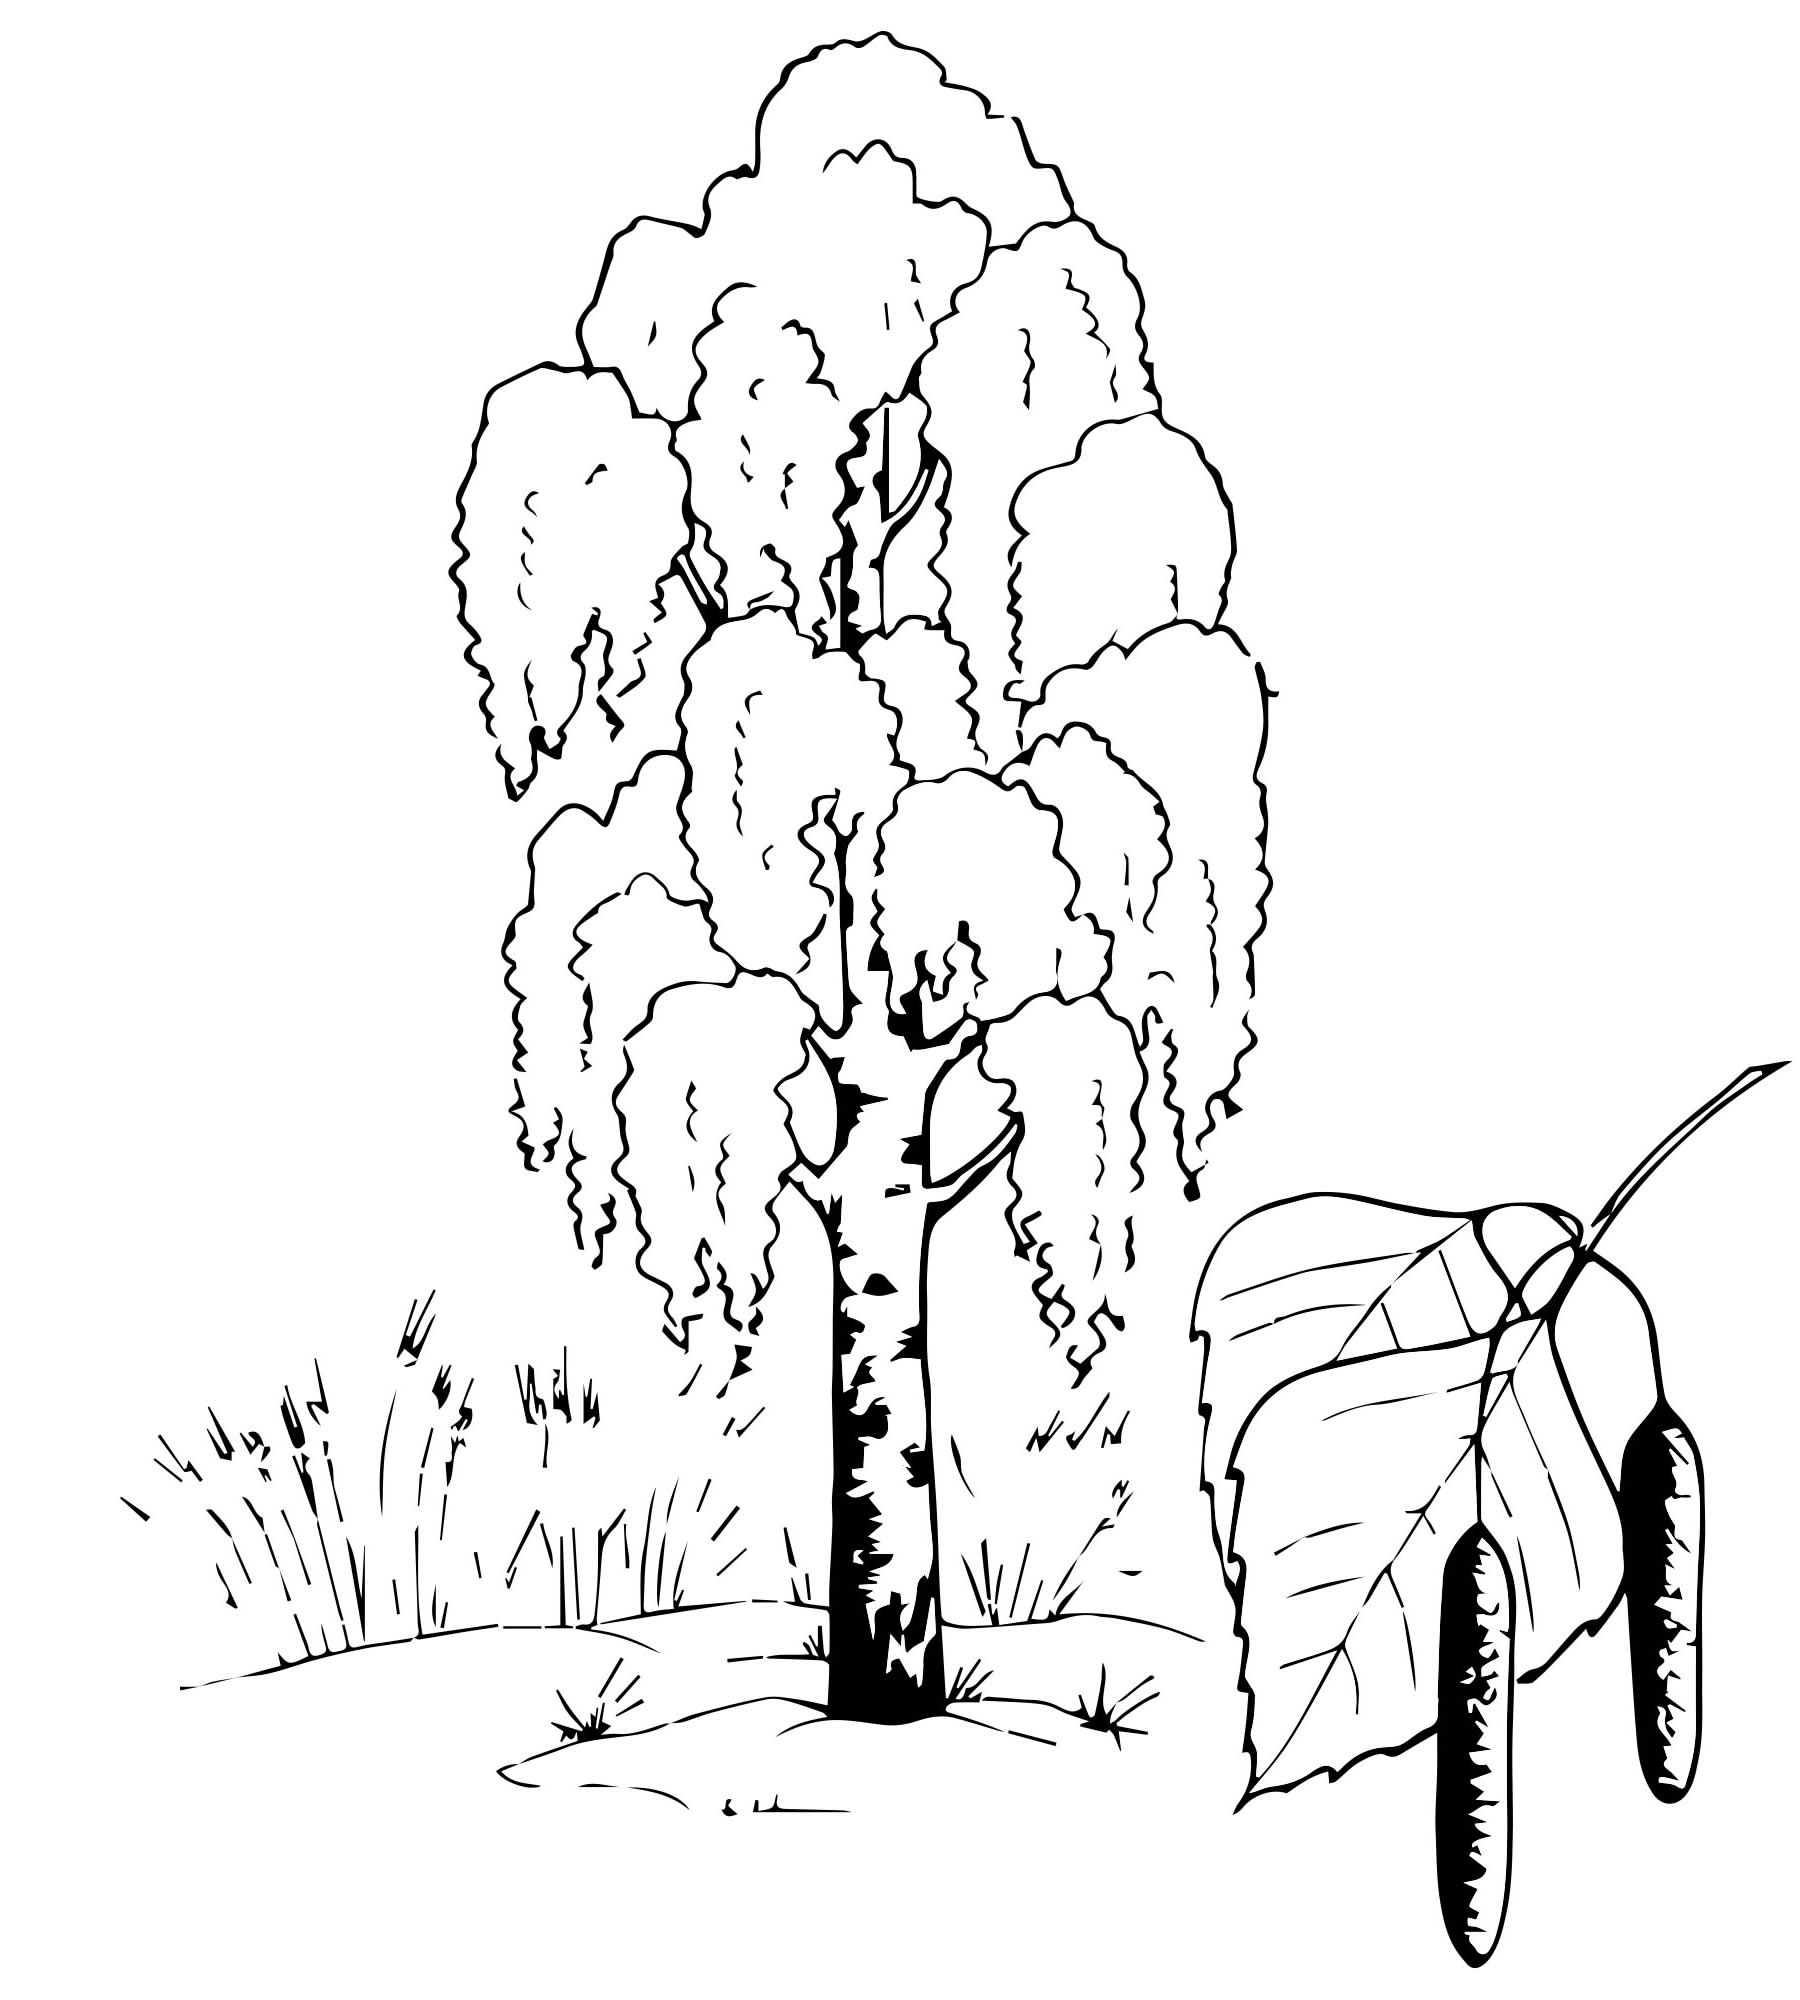 Дерево береза зимой: подборка картинок